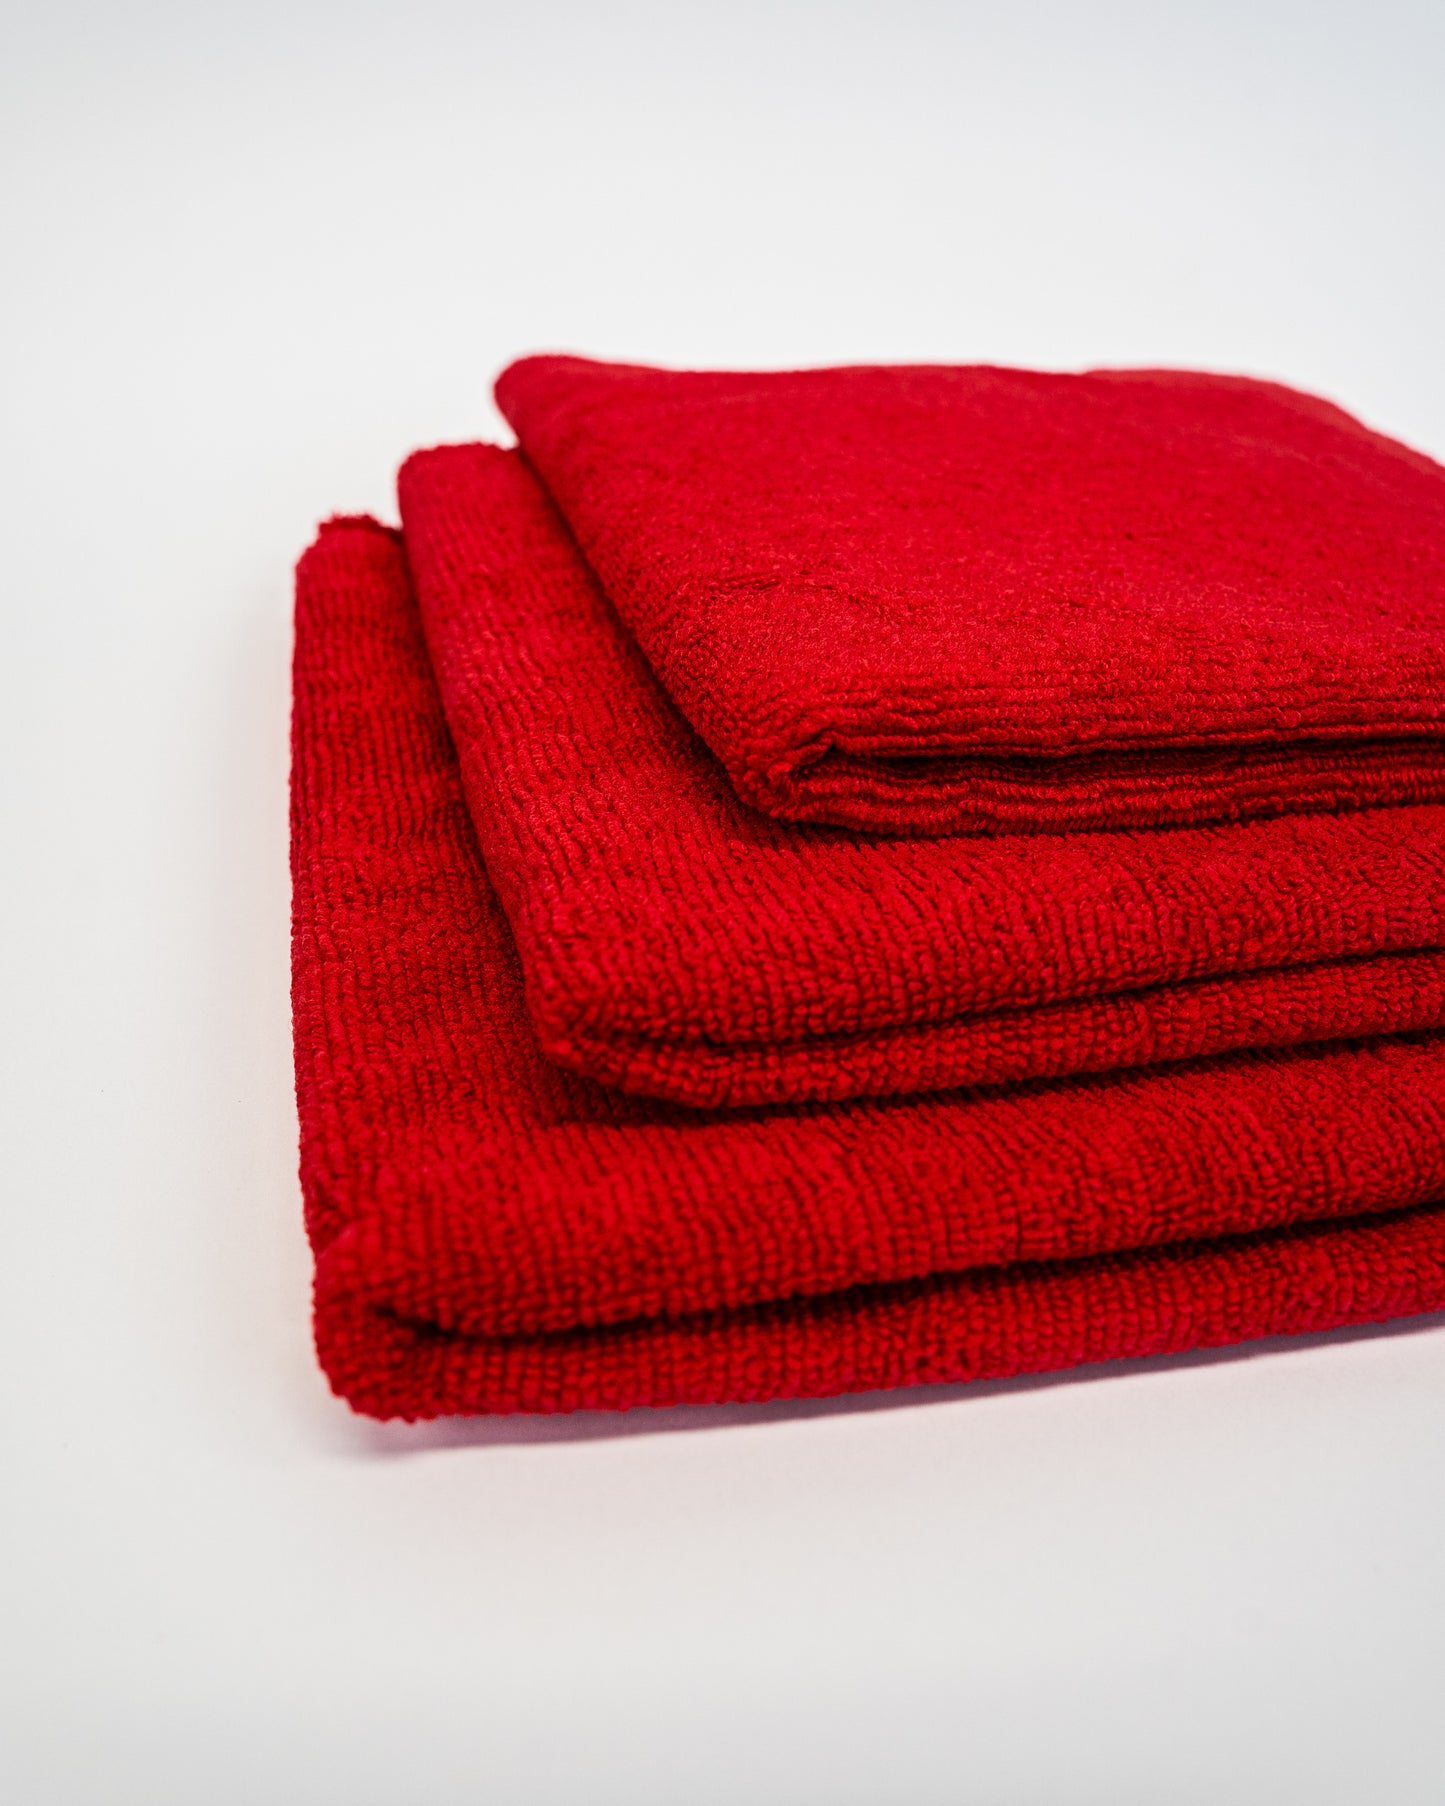 Duplex Edgeless Cloth 3 Pack - Red